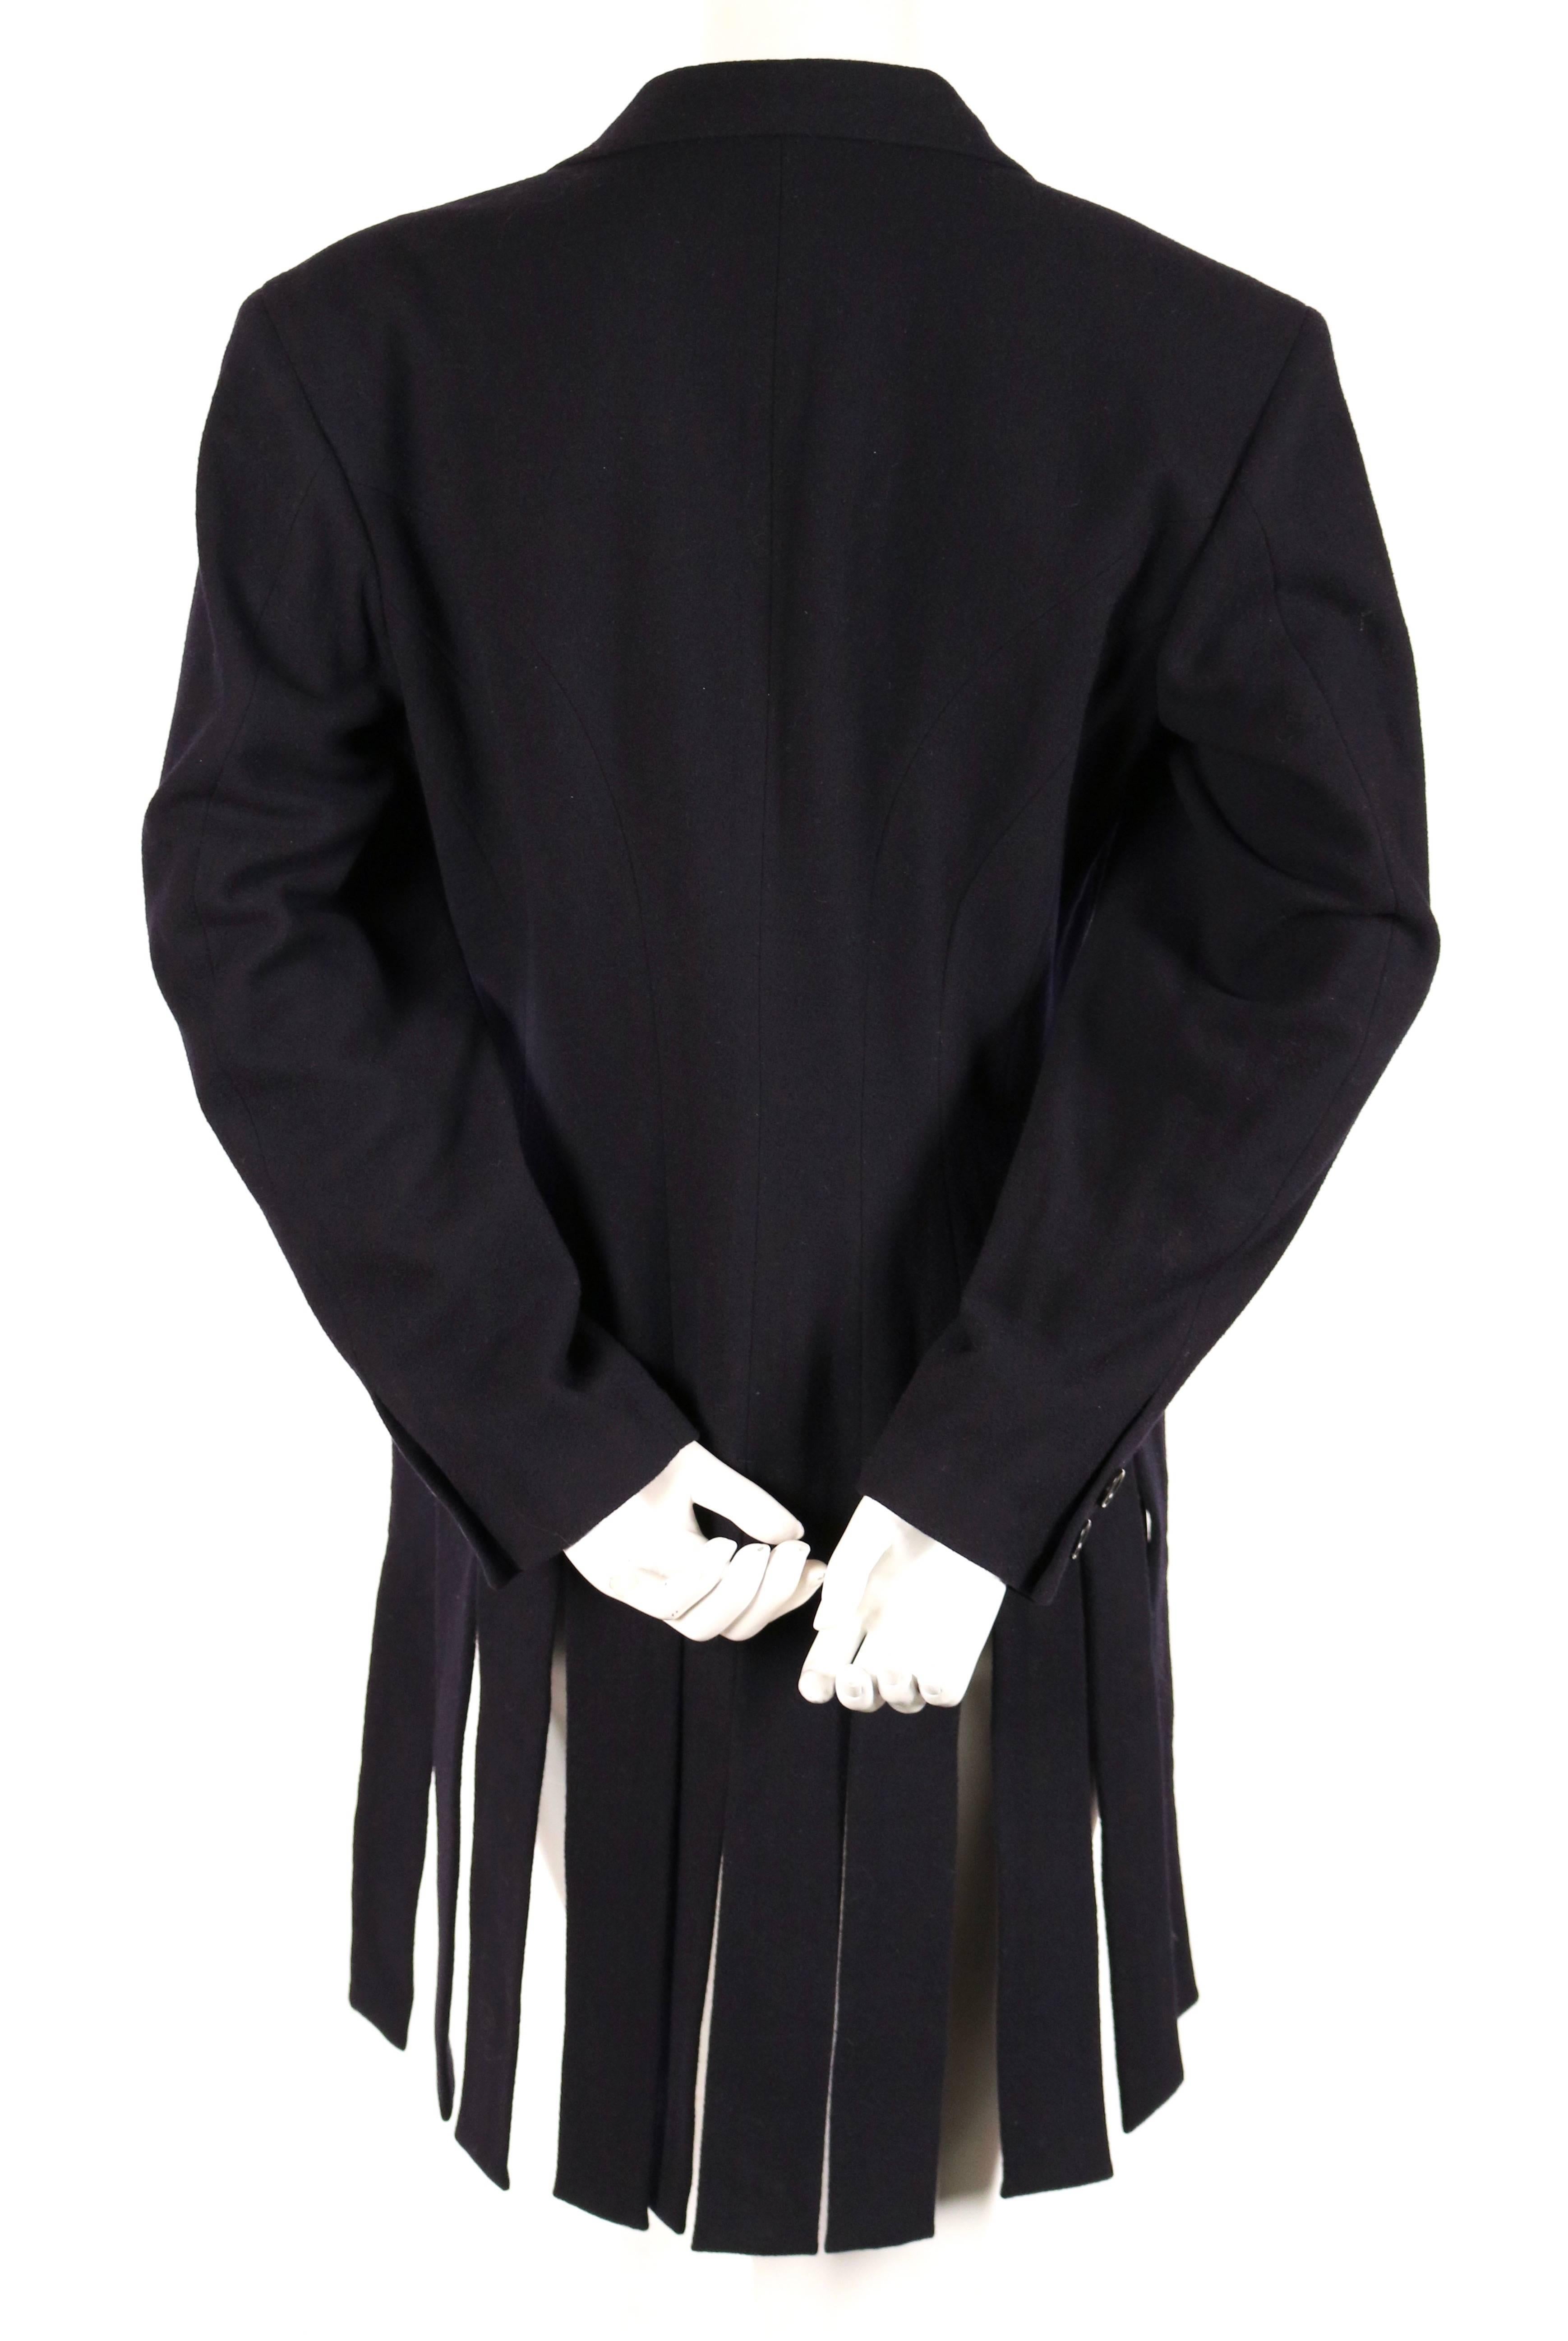 Black Yohji Yamamoto black wool jacket with carwash hemline, 1980s